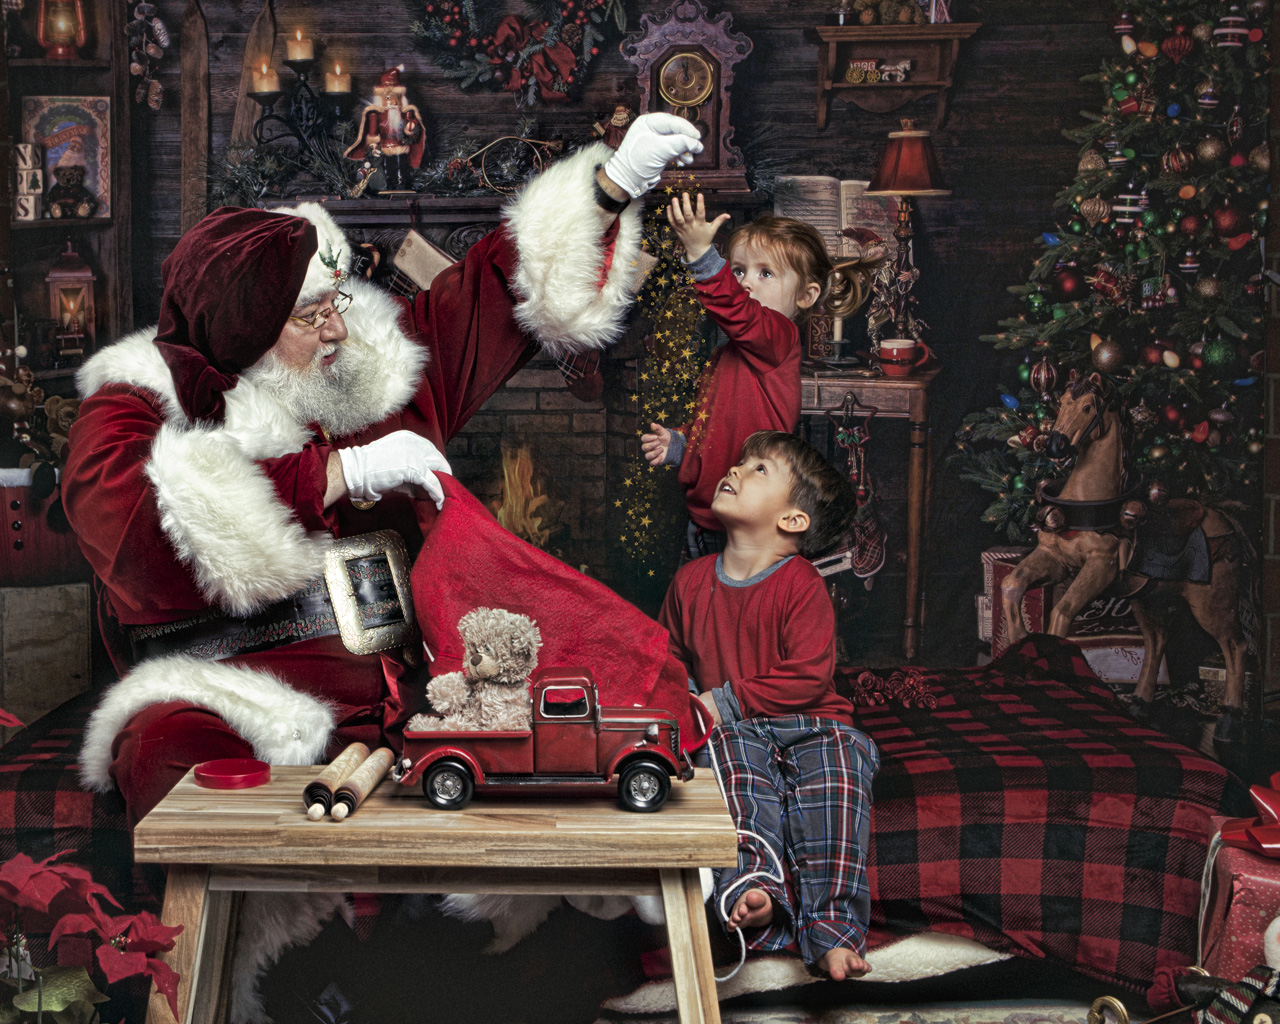 Santa dropping fairy dust during a Christmas mini photoshoot